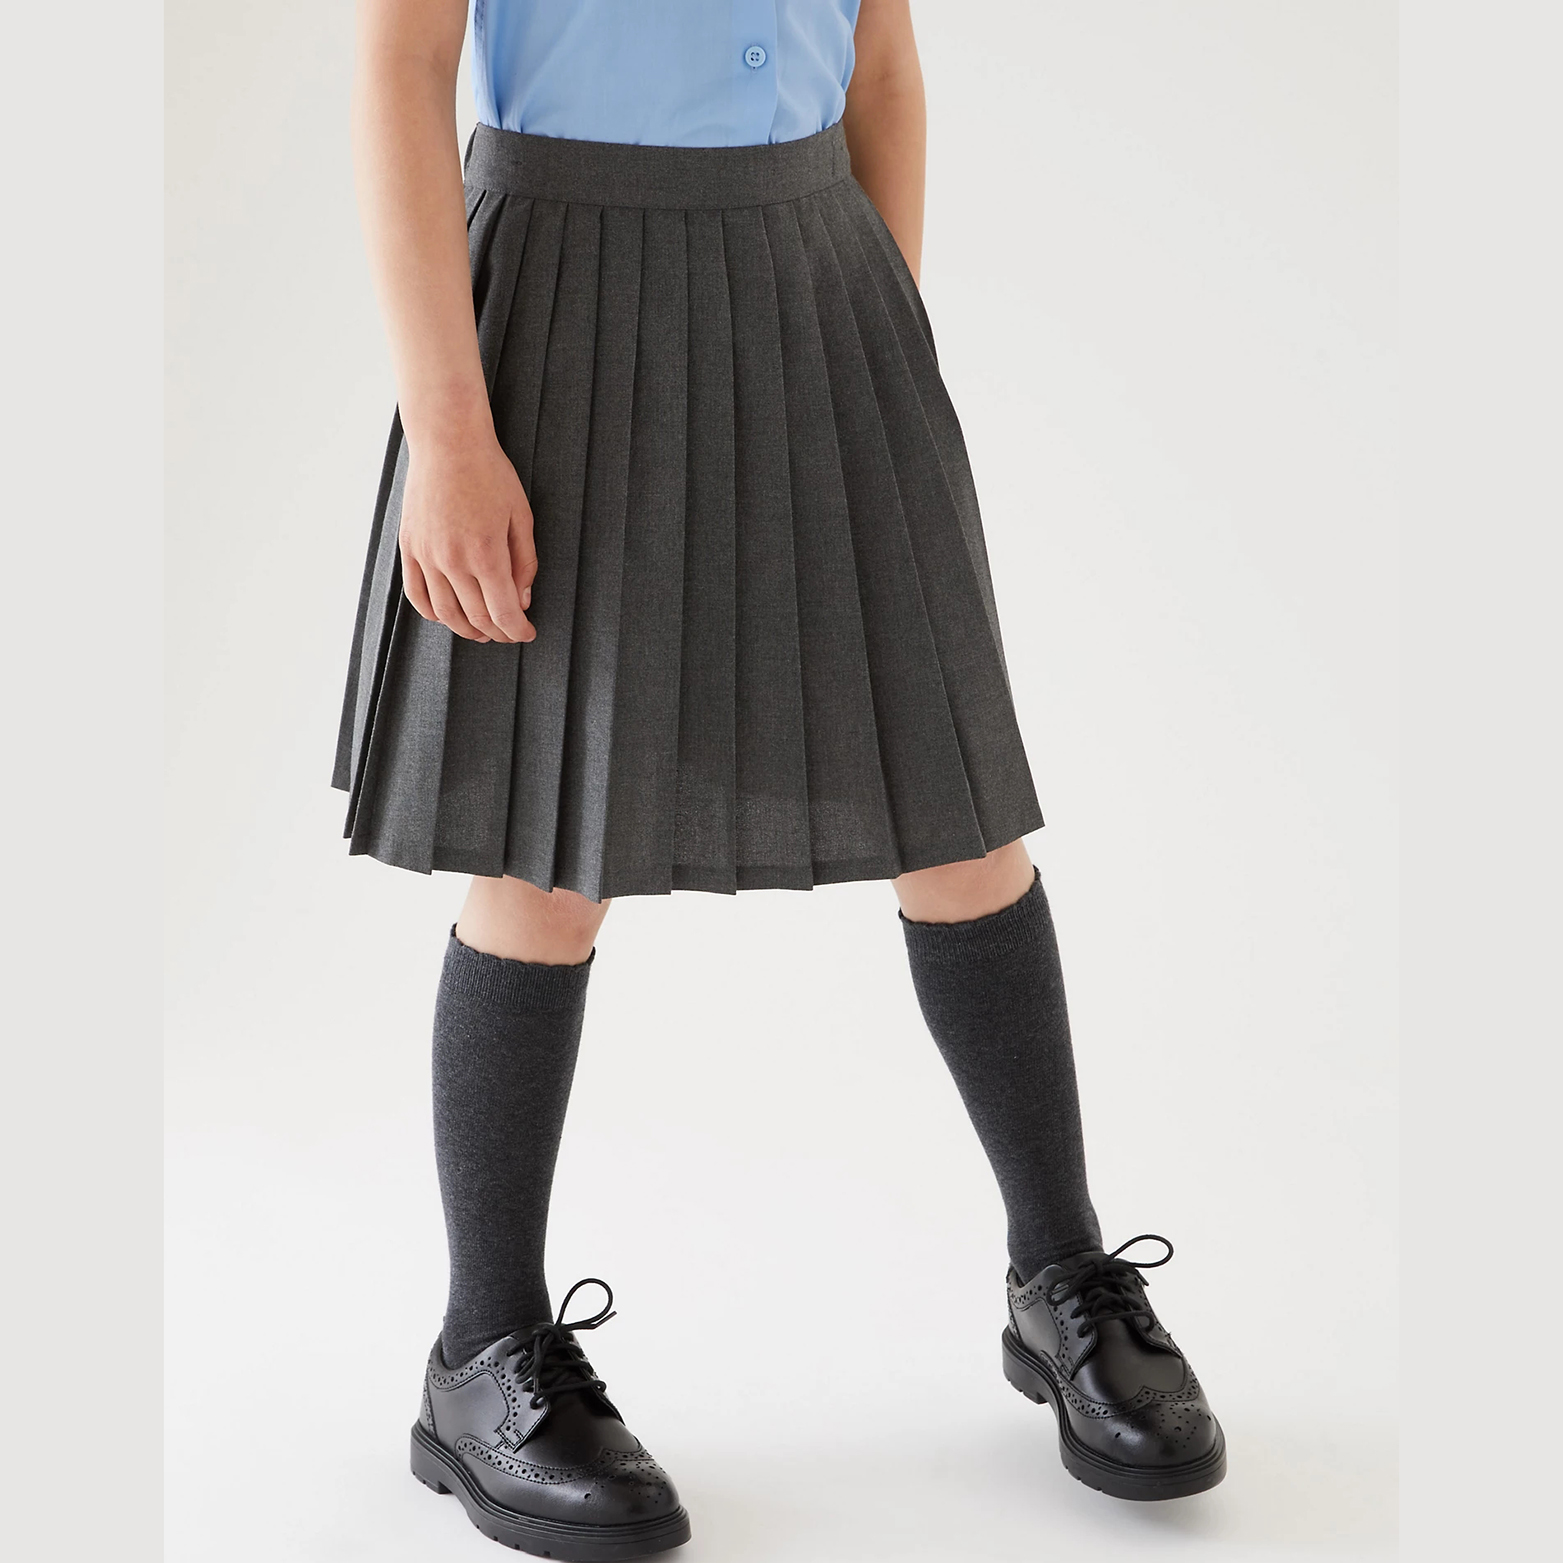 Fashionable Girl Uniforms Dim Grey Elastic Waist Pleated Skirts Pinafore School Uniforms